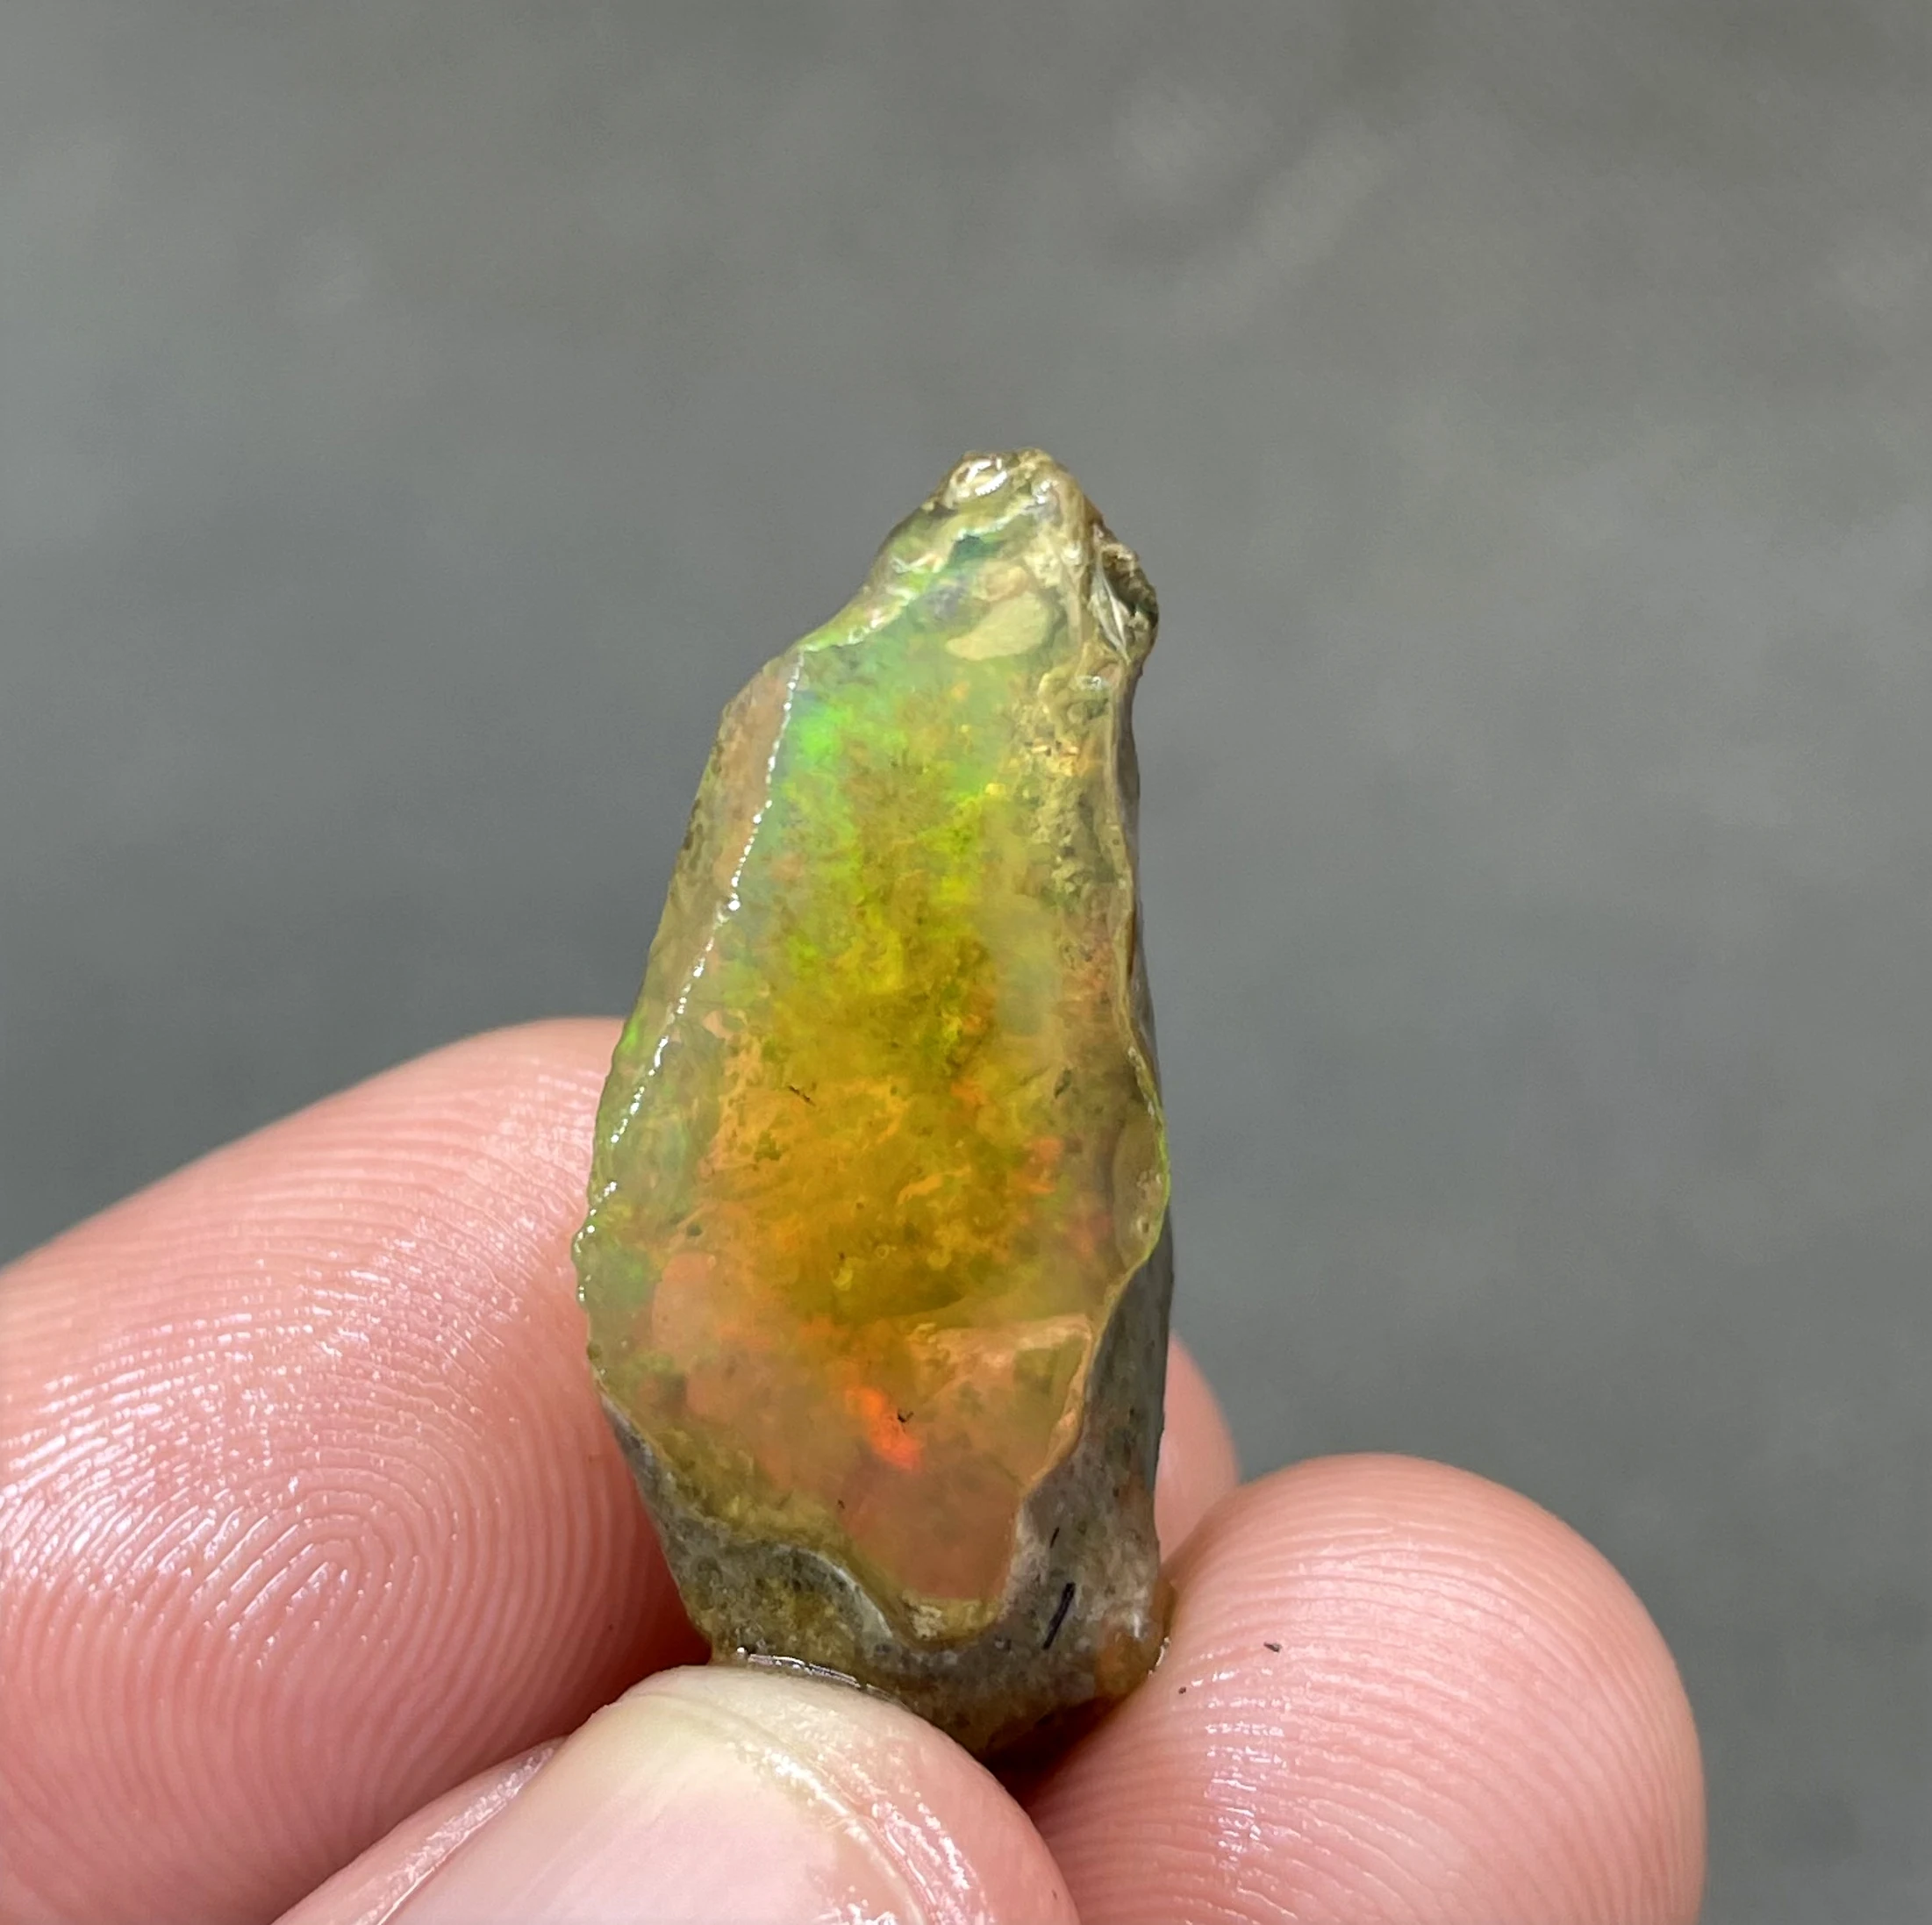 

BEST COLOR! 3g natural rare color Ethiopia water Opal gem mineral specimen stones and crystals healing crystals quartz